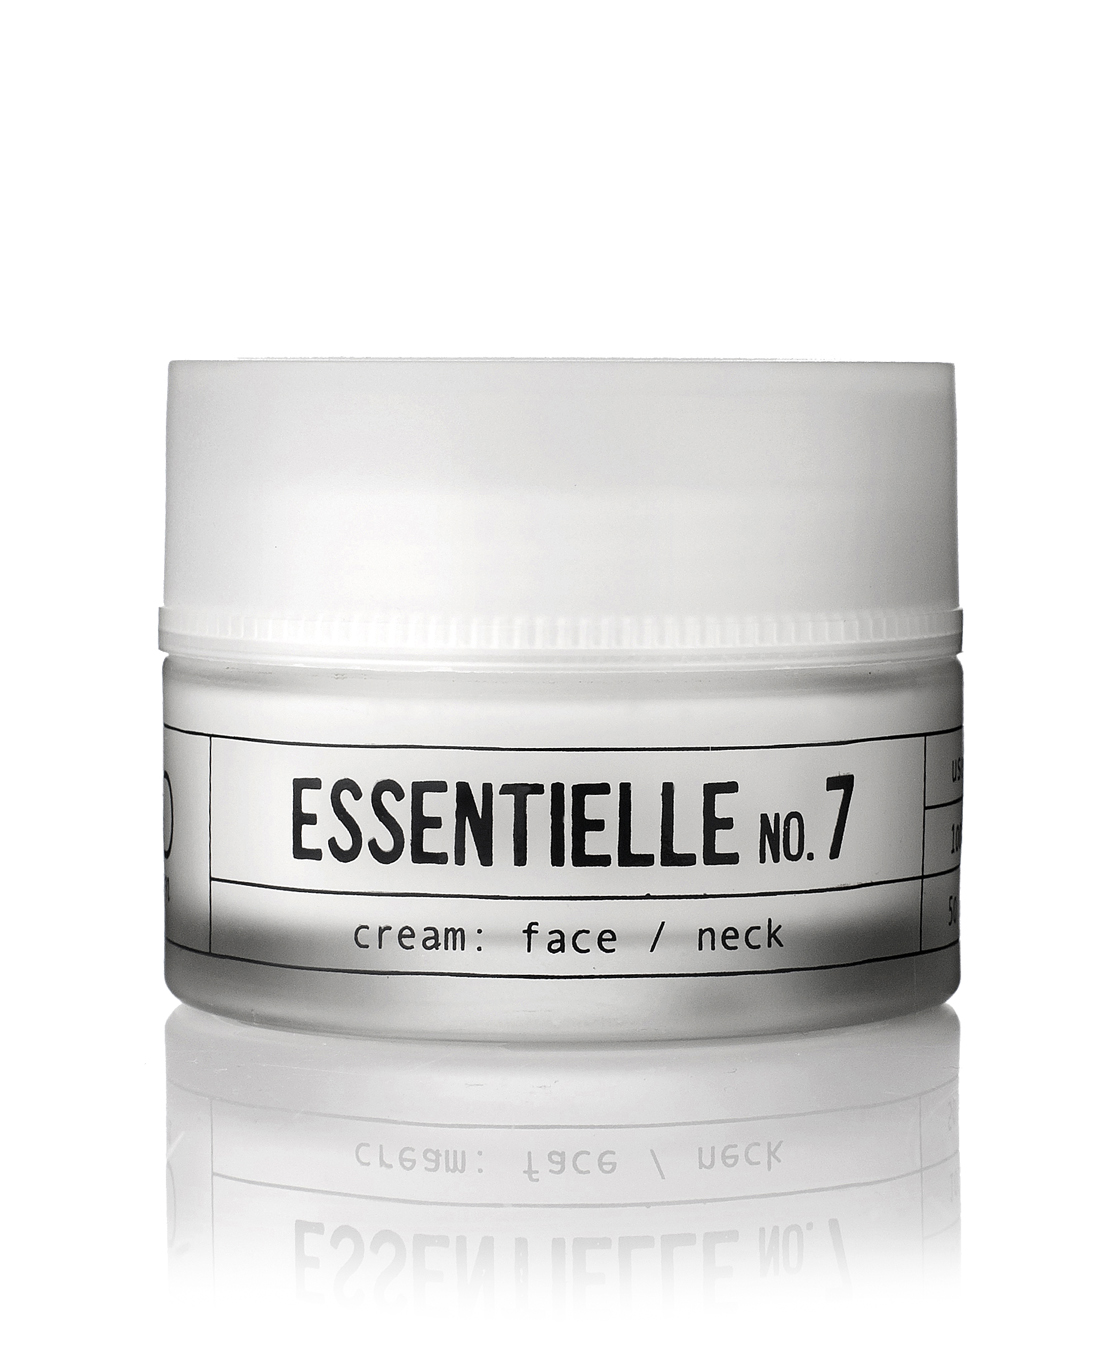  Essentielle No.7 Face/Neck Cream